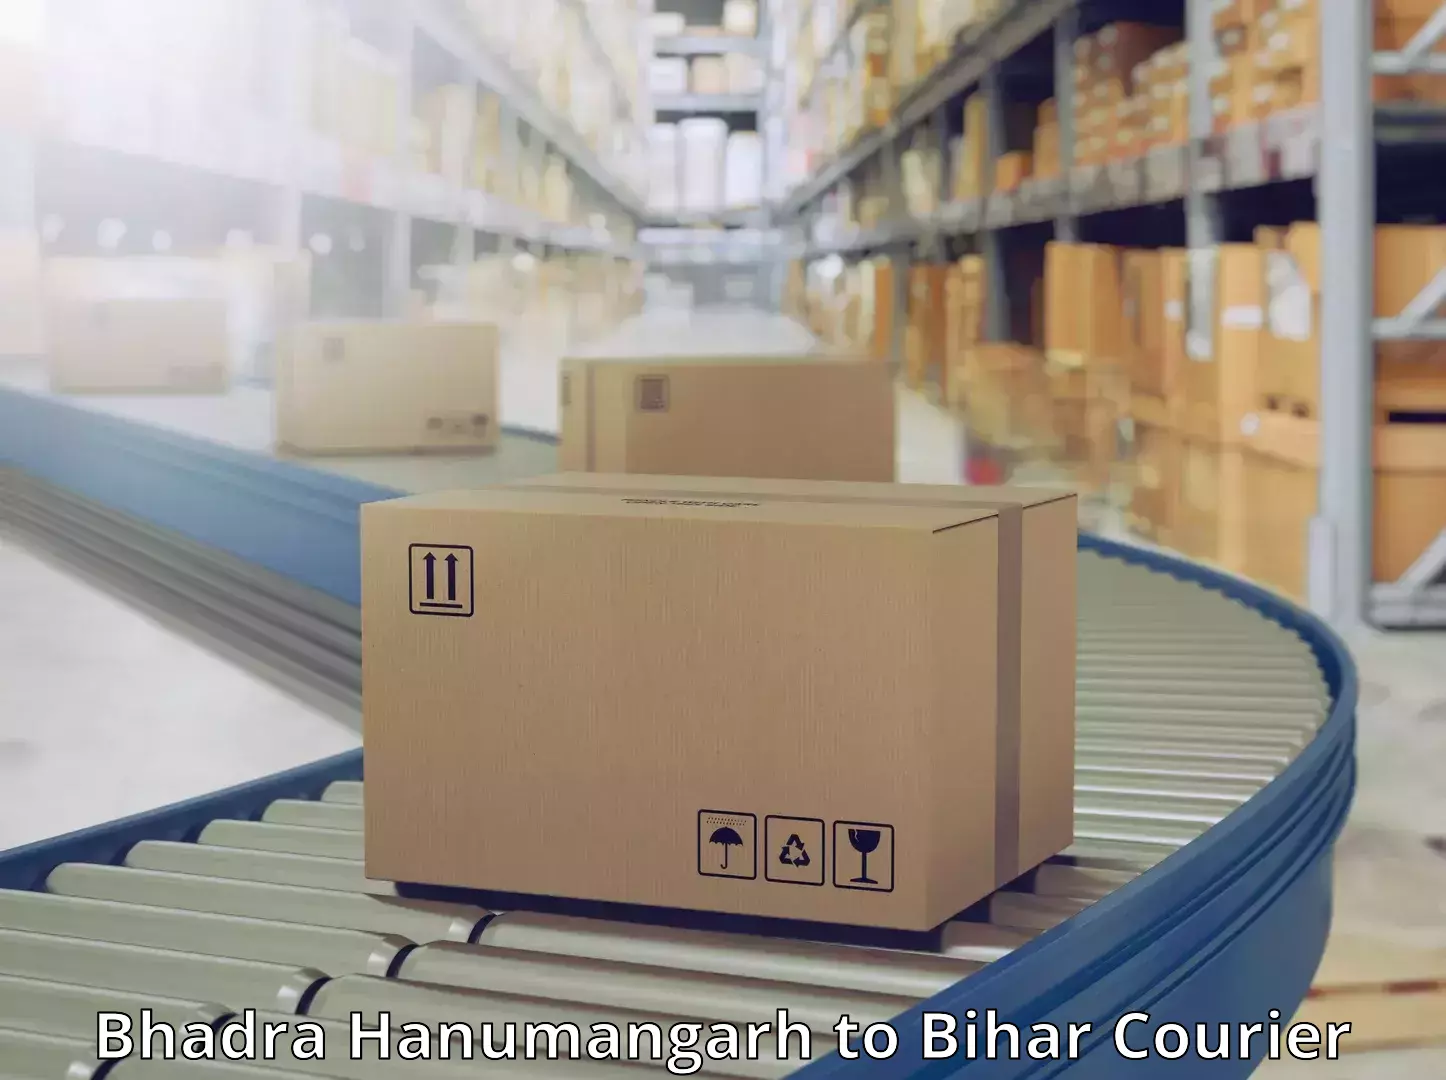 Express delivery capabilities Bhadra Hanumangarh to Mashrakh